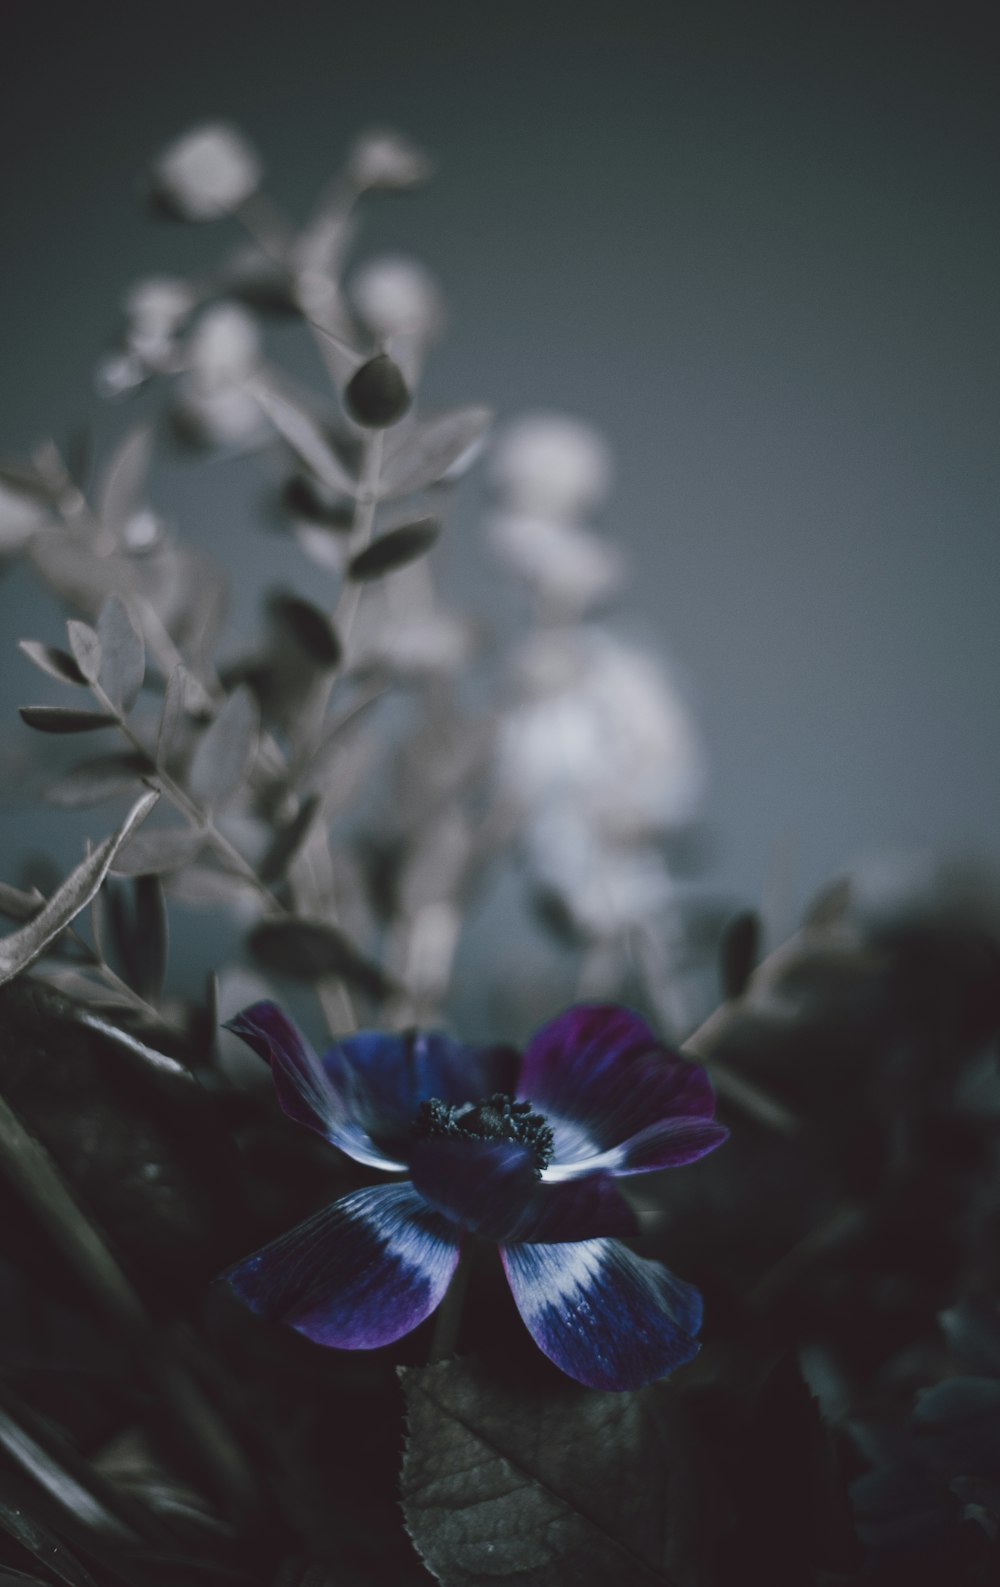 macro photography of petaled flower